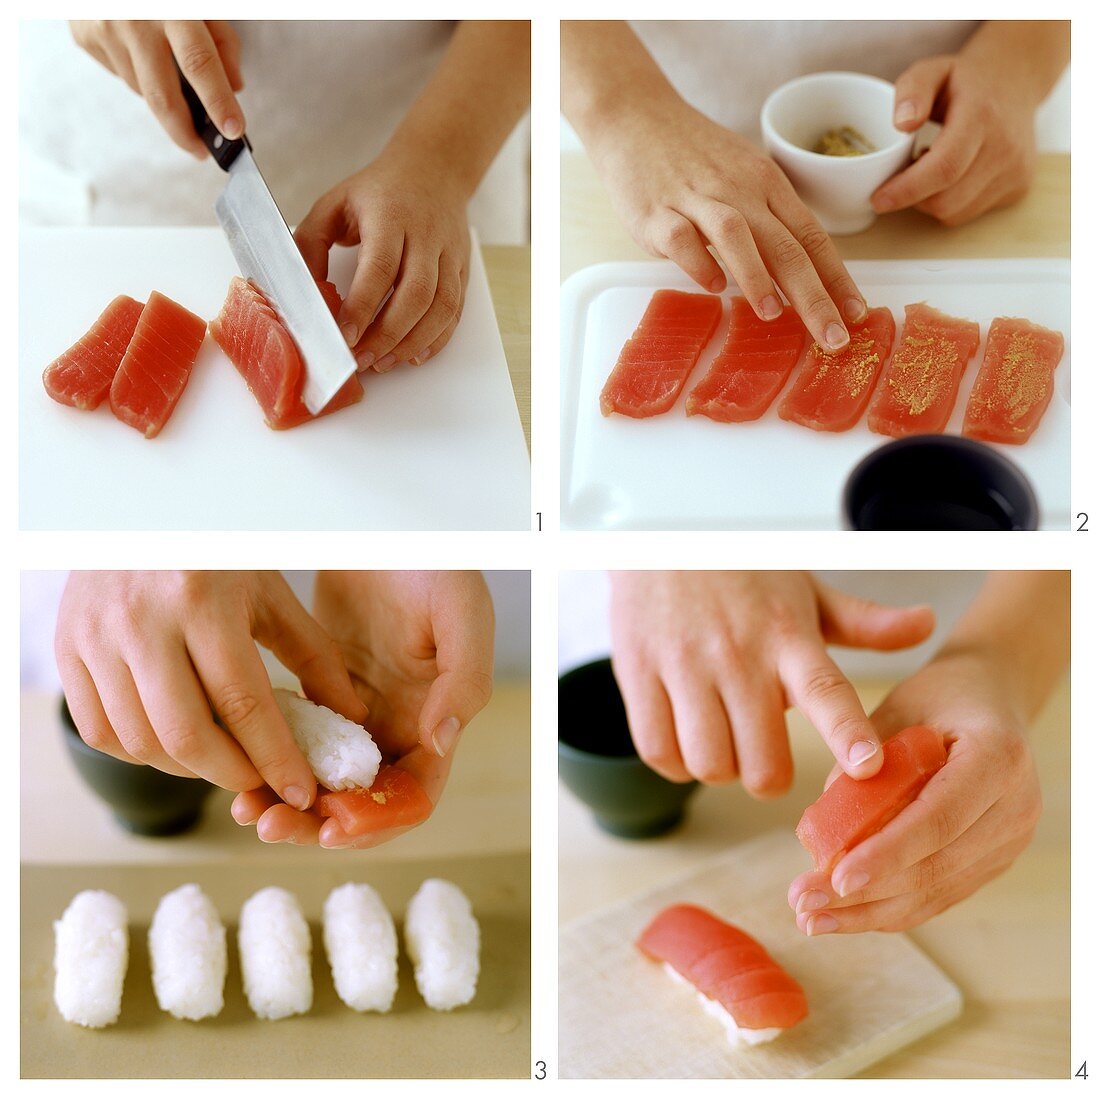 Preparing Nigiri sushi with tuna